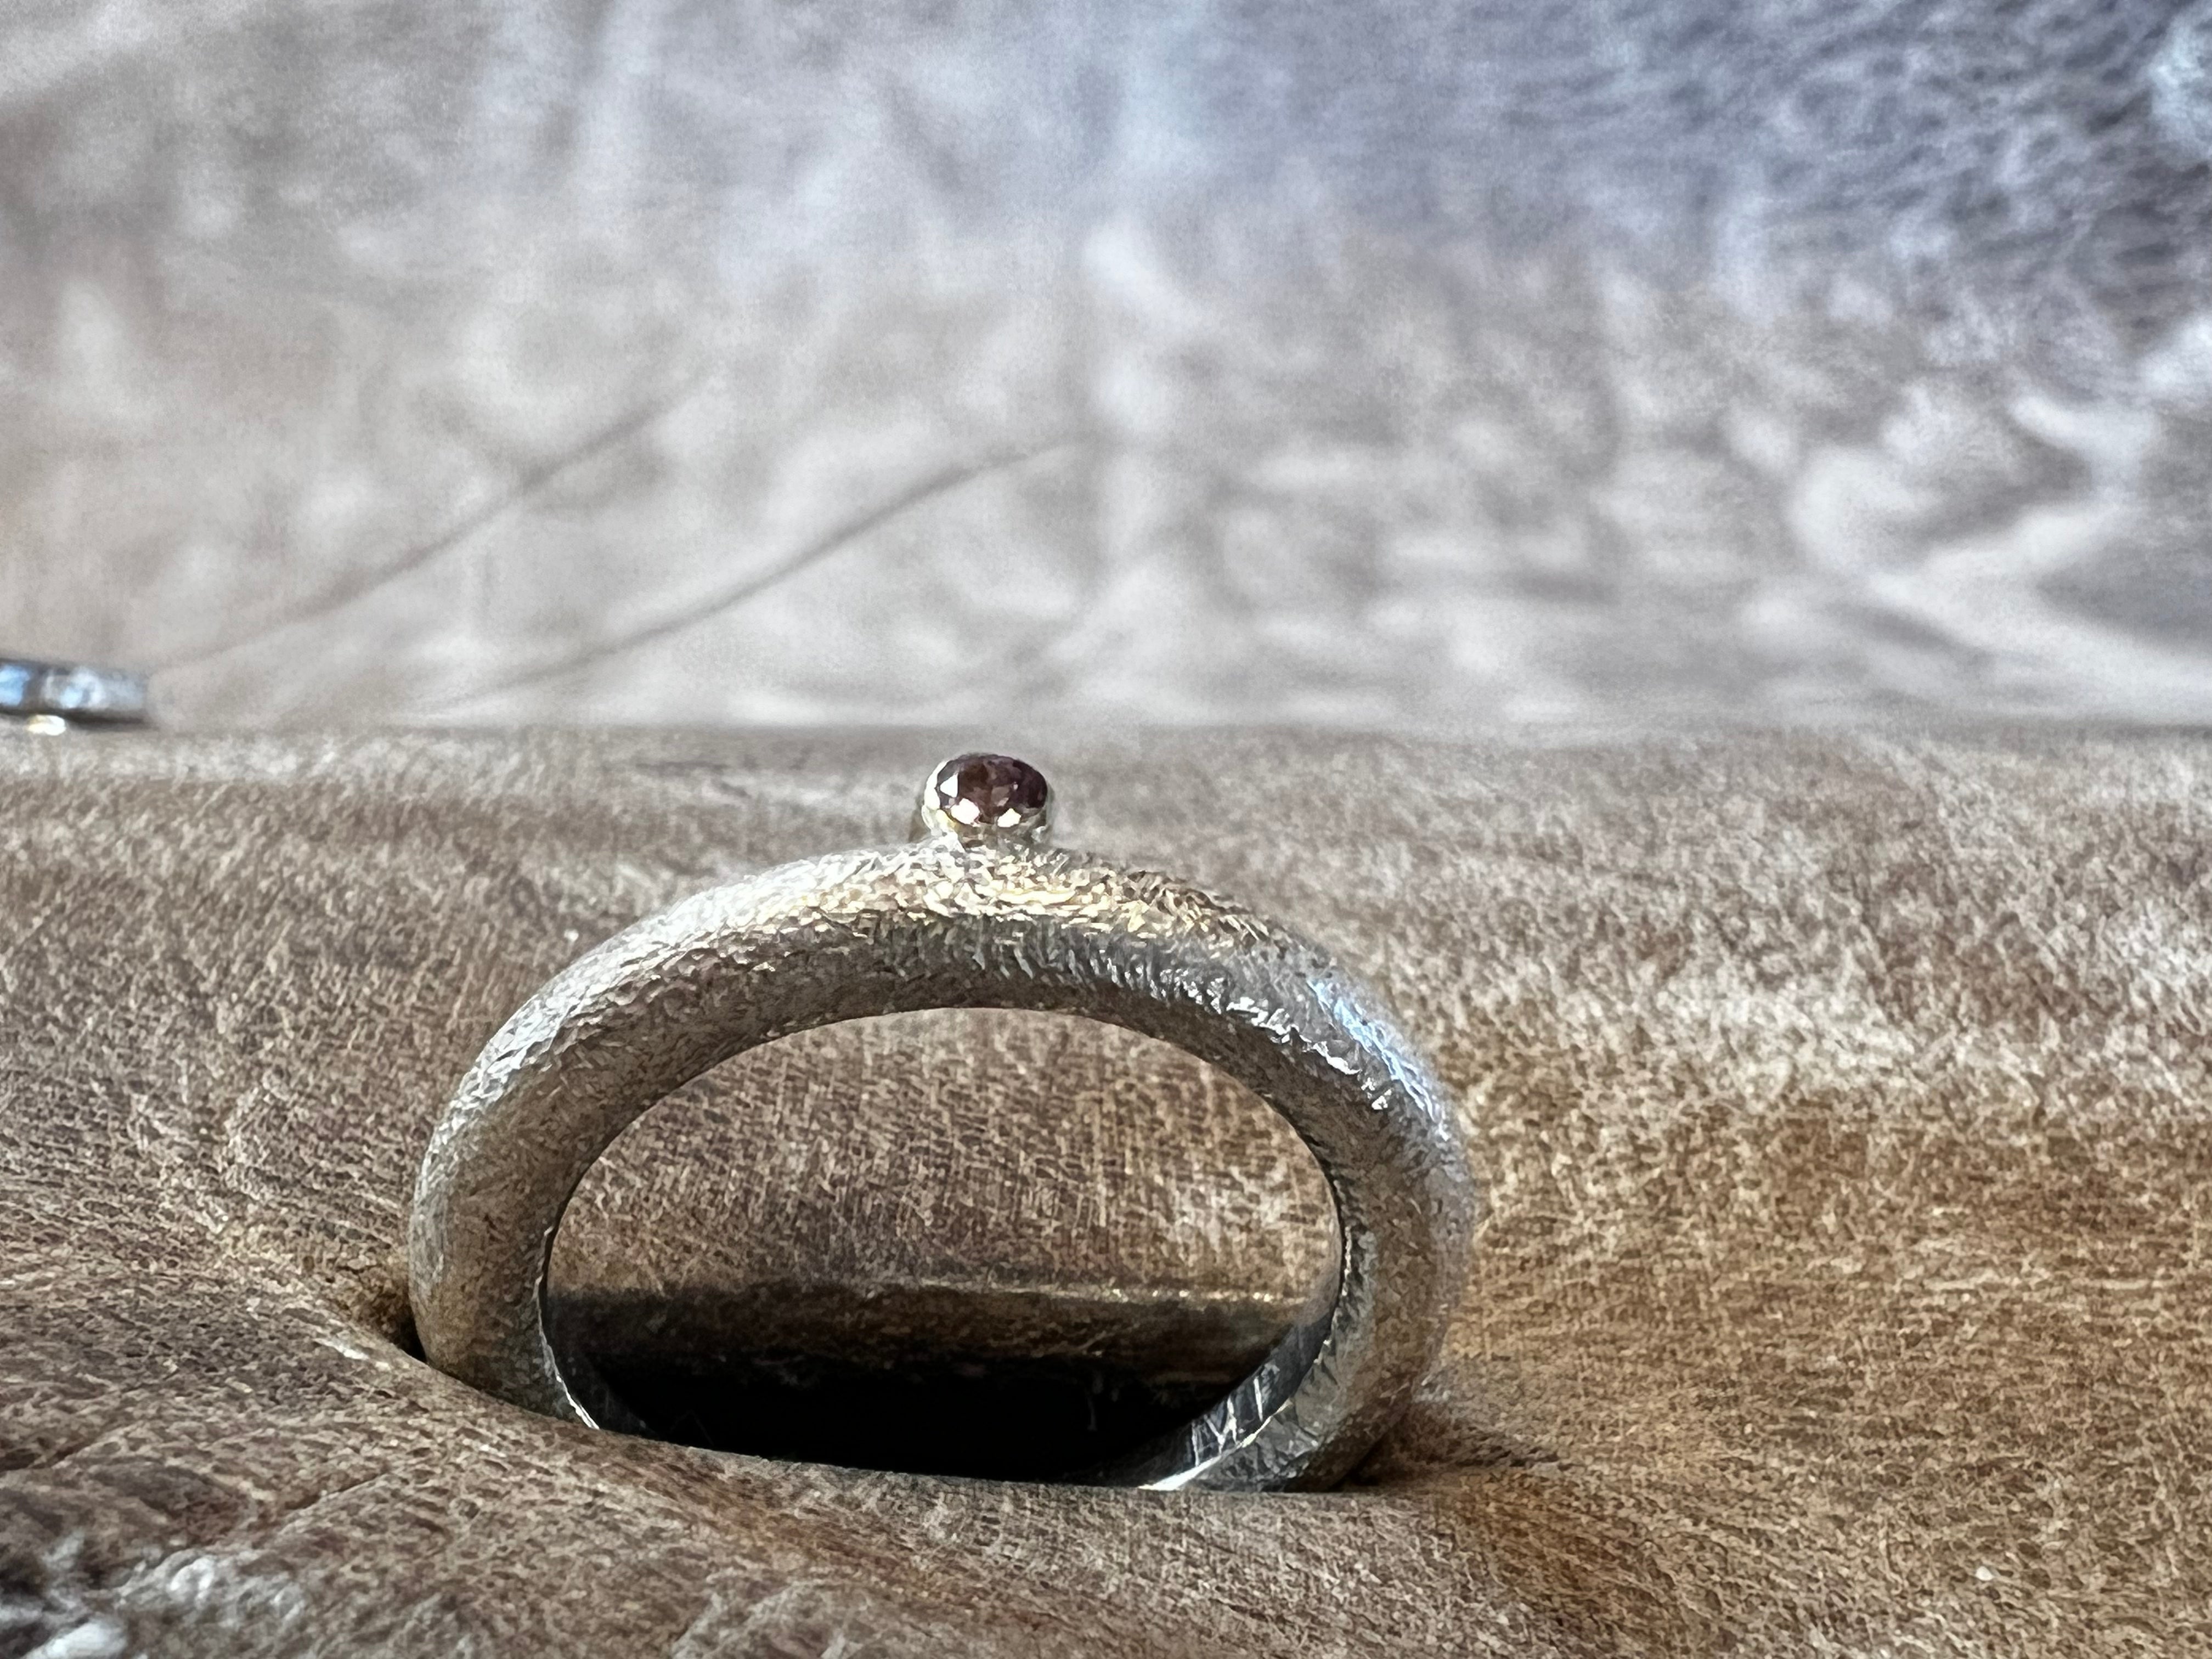 Håndlavet rustik sølv ring med pink safir